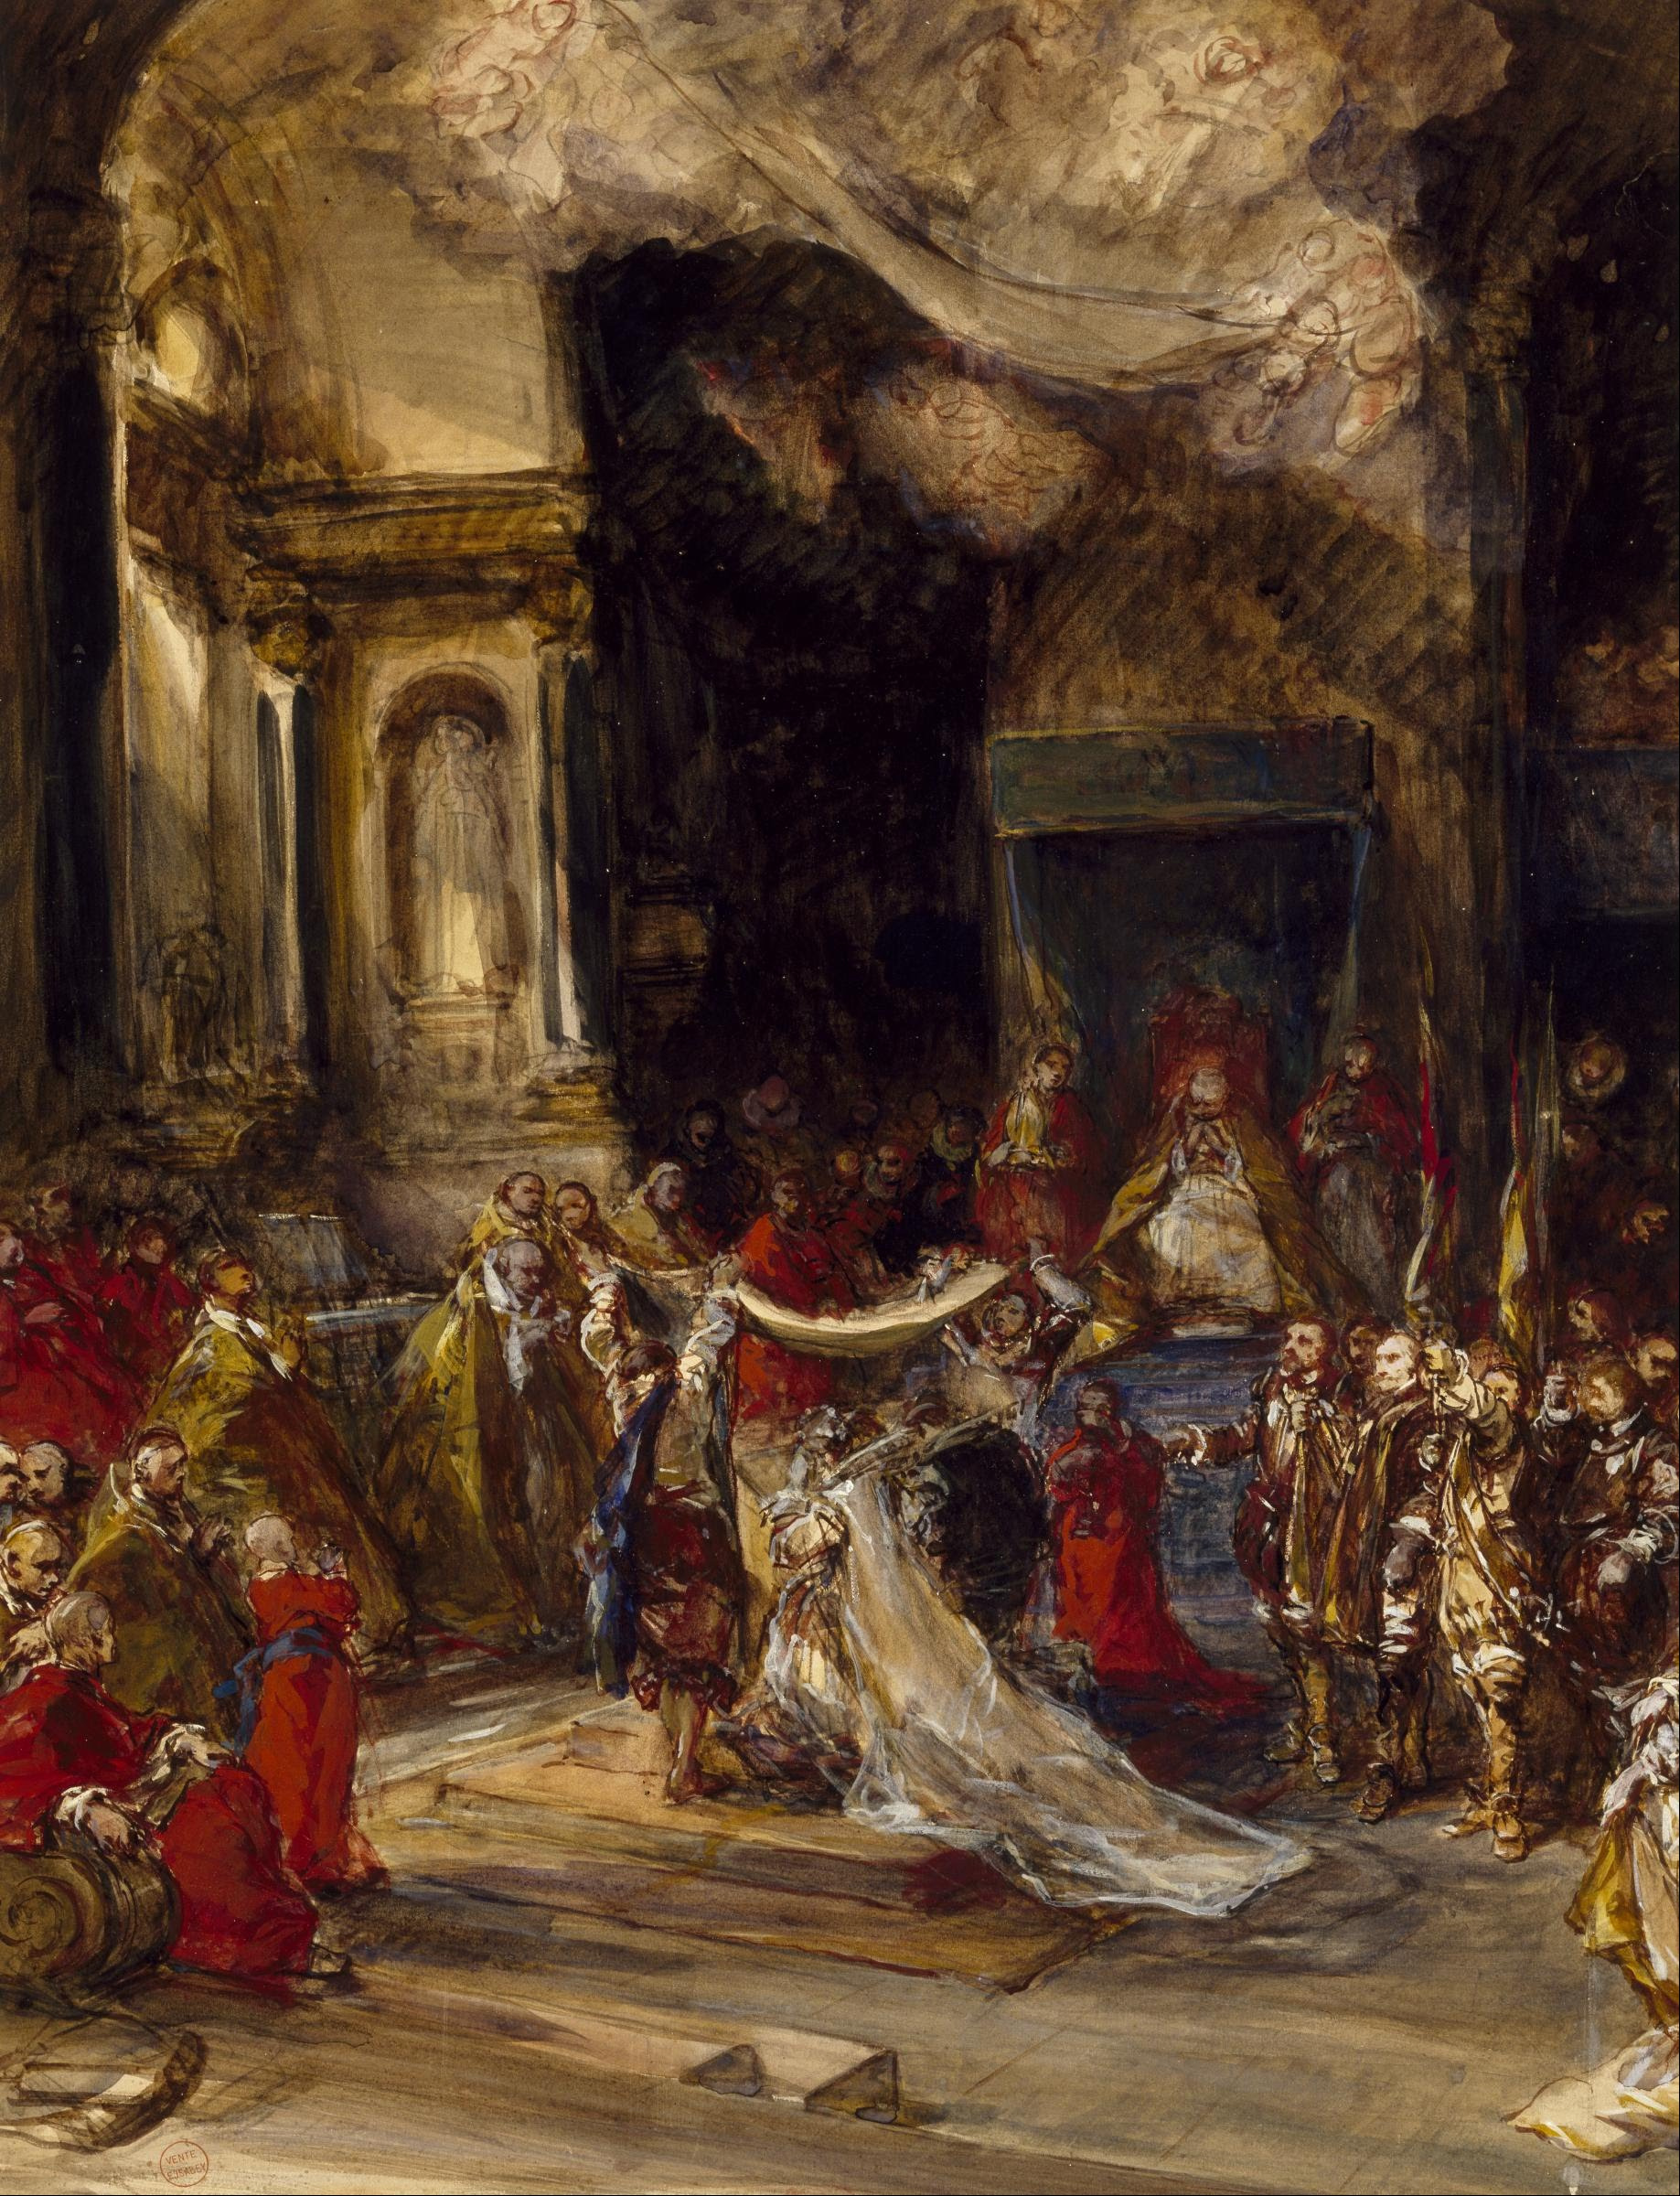 Eugène Isabey - A Royal Marriage Scene - Google Art Project